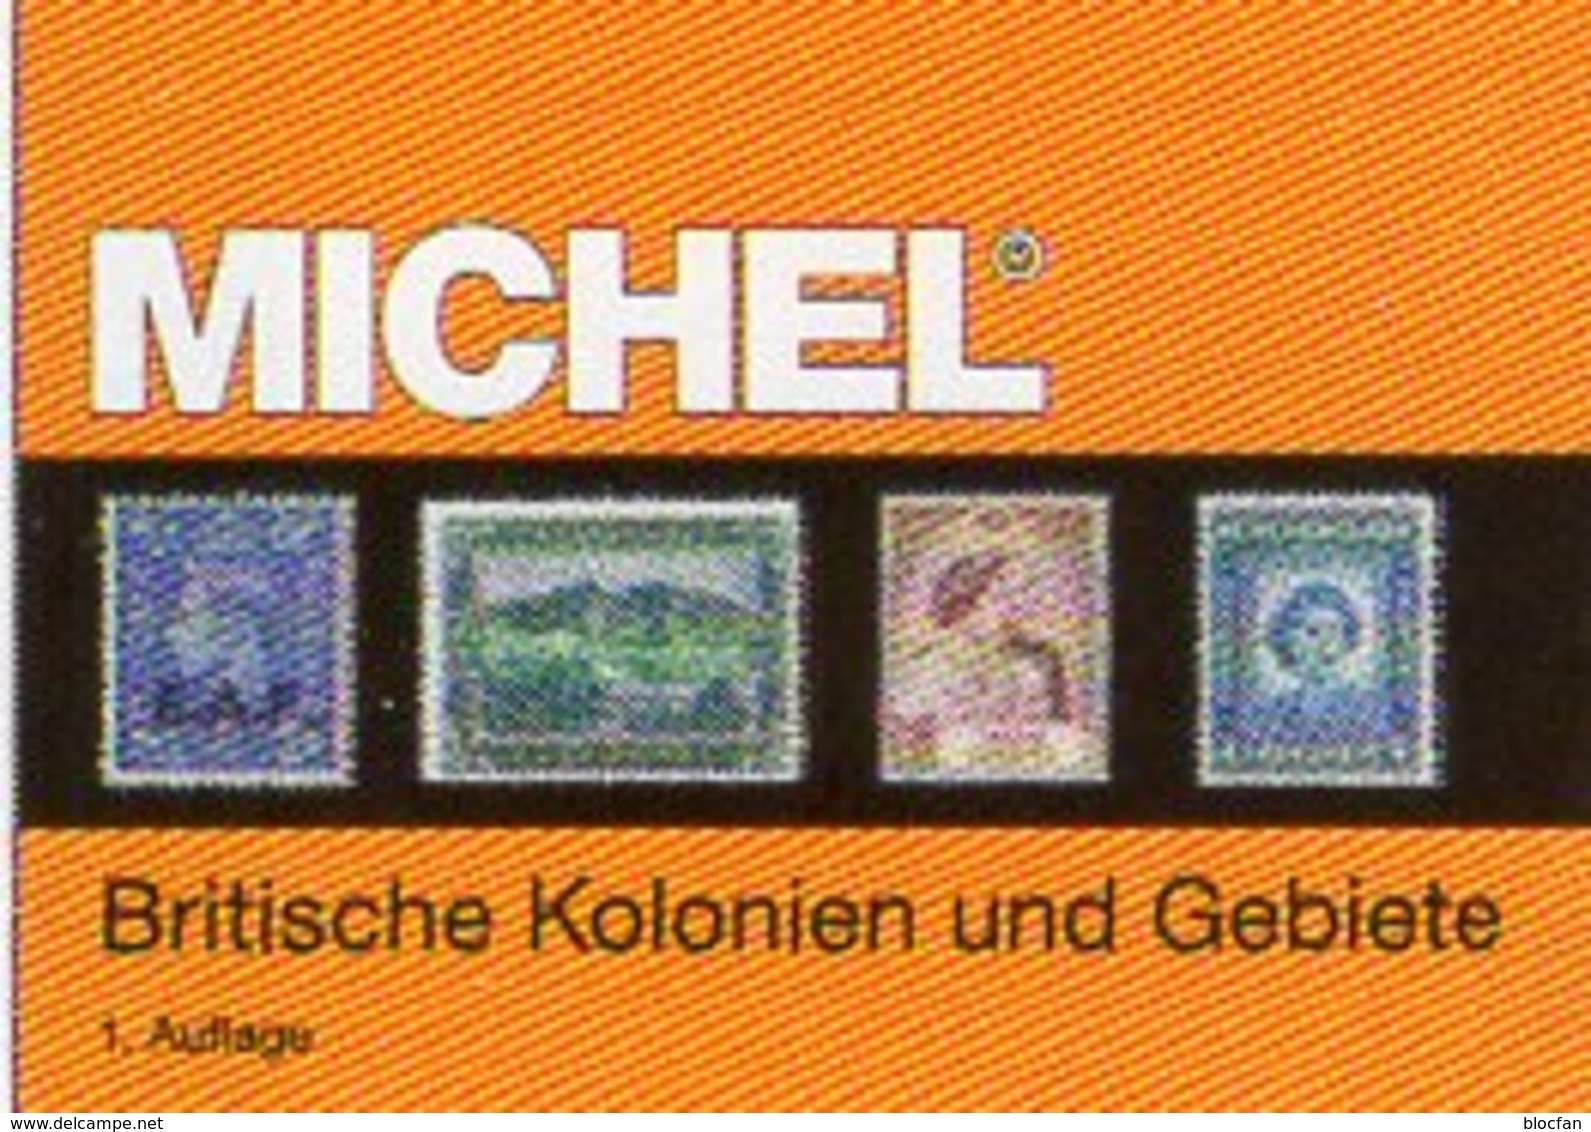 Großbritannien 1 Kolonien A-H MlCHEL 2018 New 89€ Britische Gebiete Stamp Catalogue Of Old UK ISBN978-3-95402-281-6 - Encyclopedieën